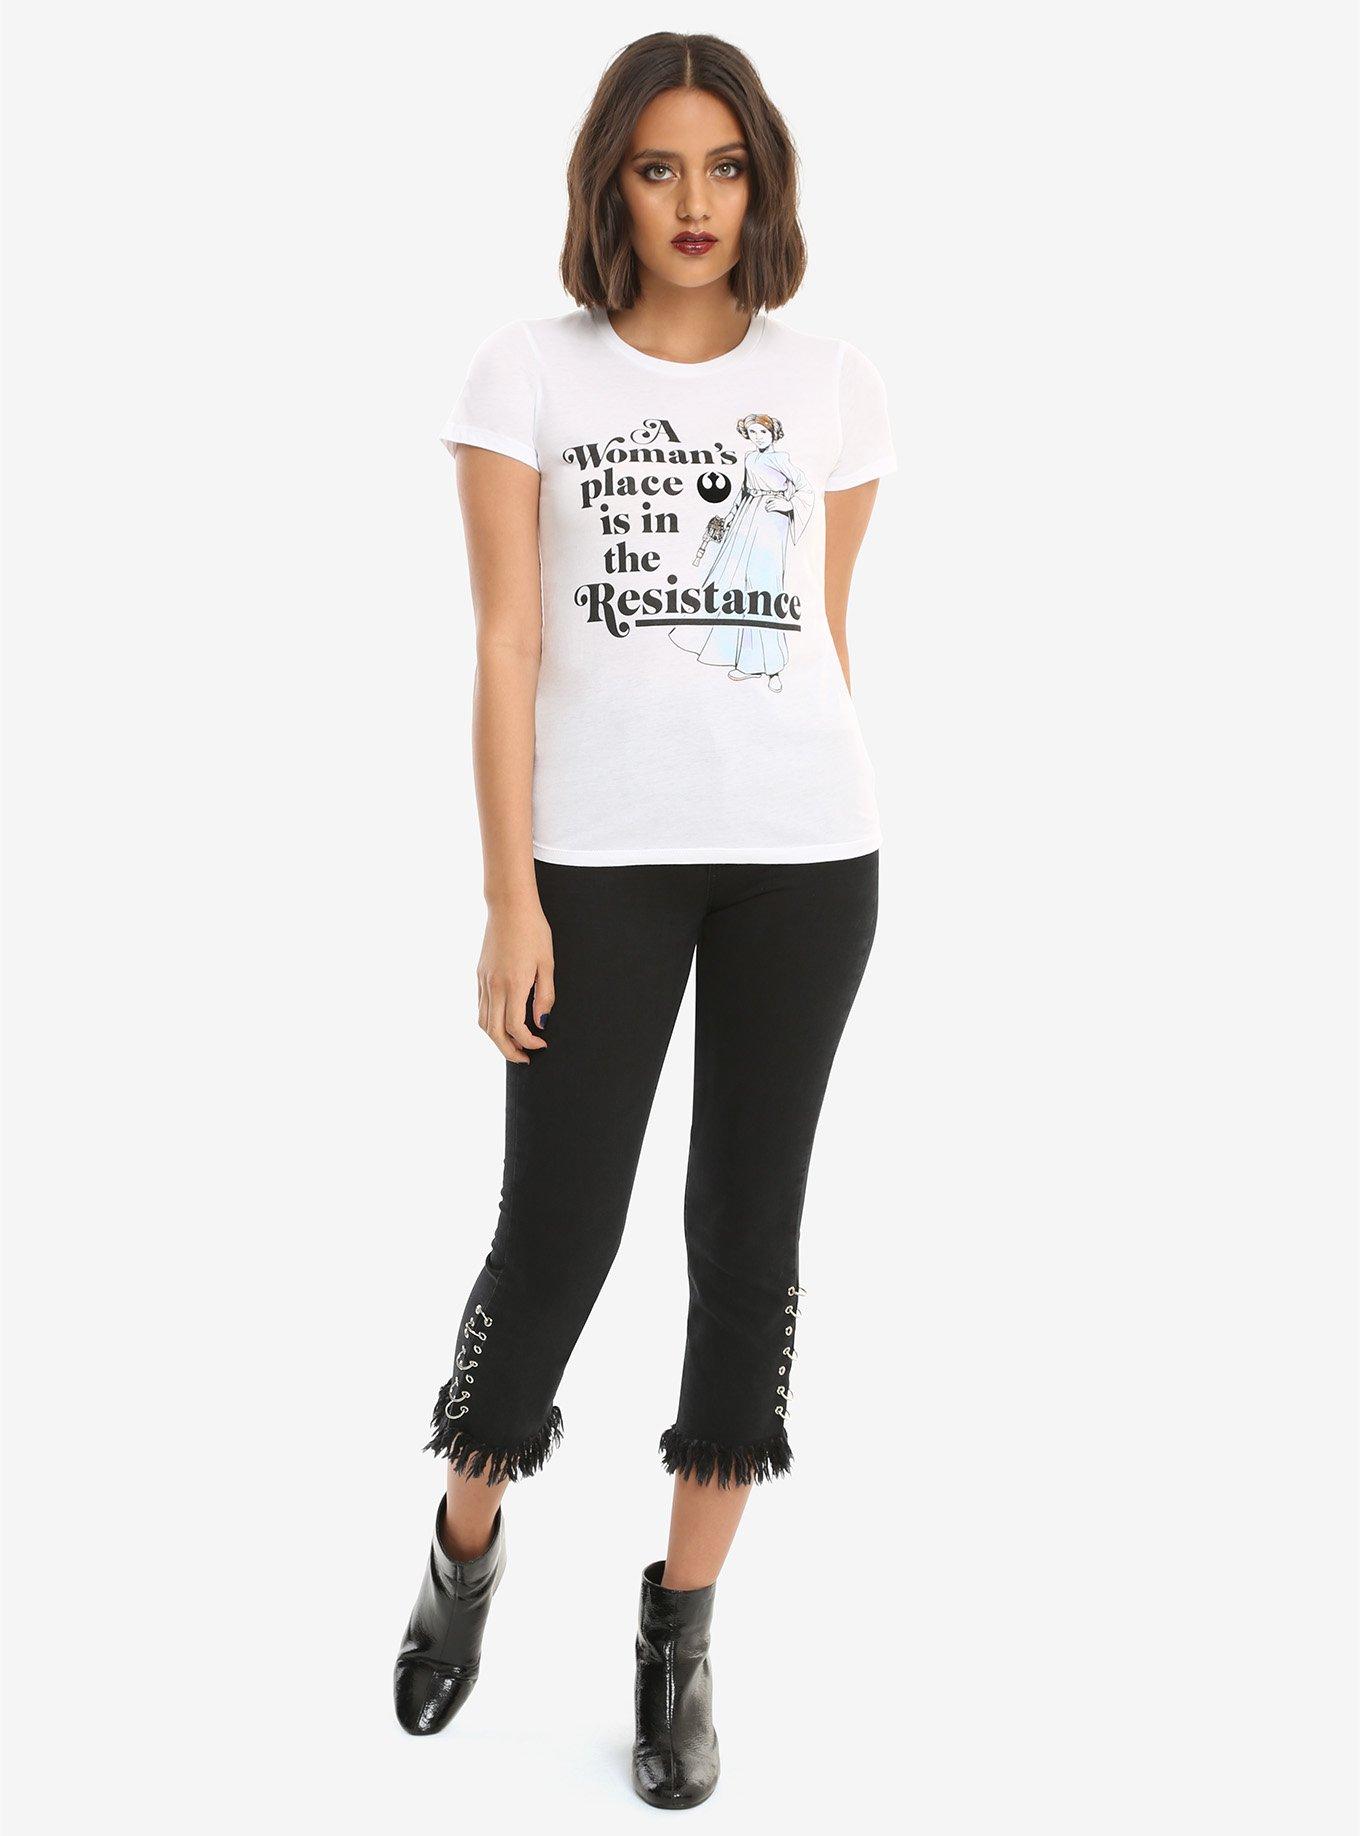 Star Wars Woman's Place Girls T-Shirt, WHITE, alternate